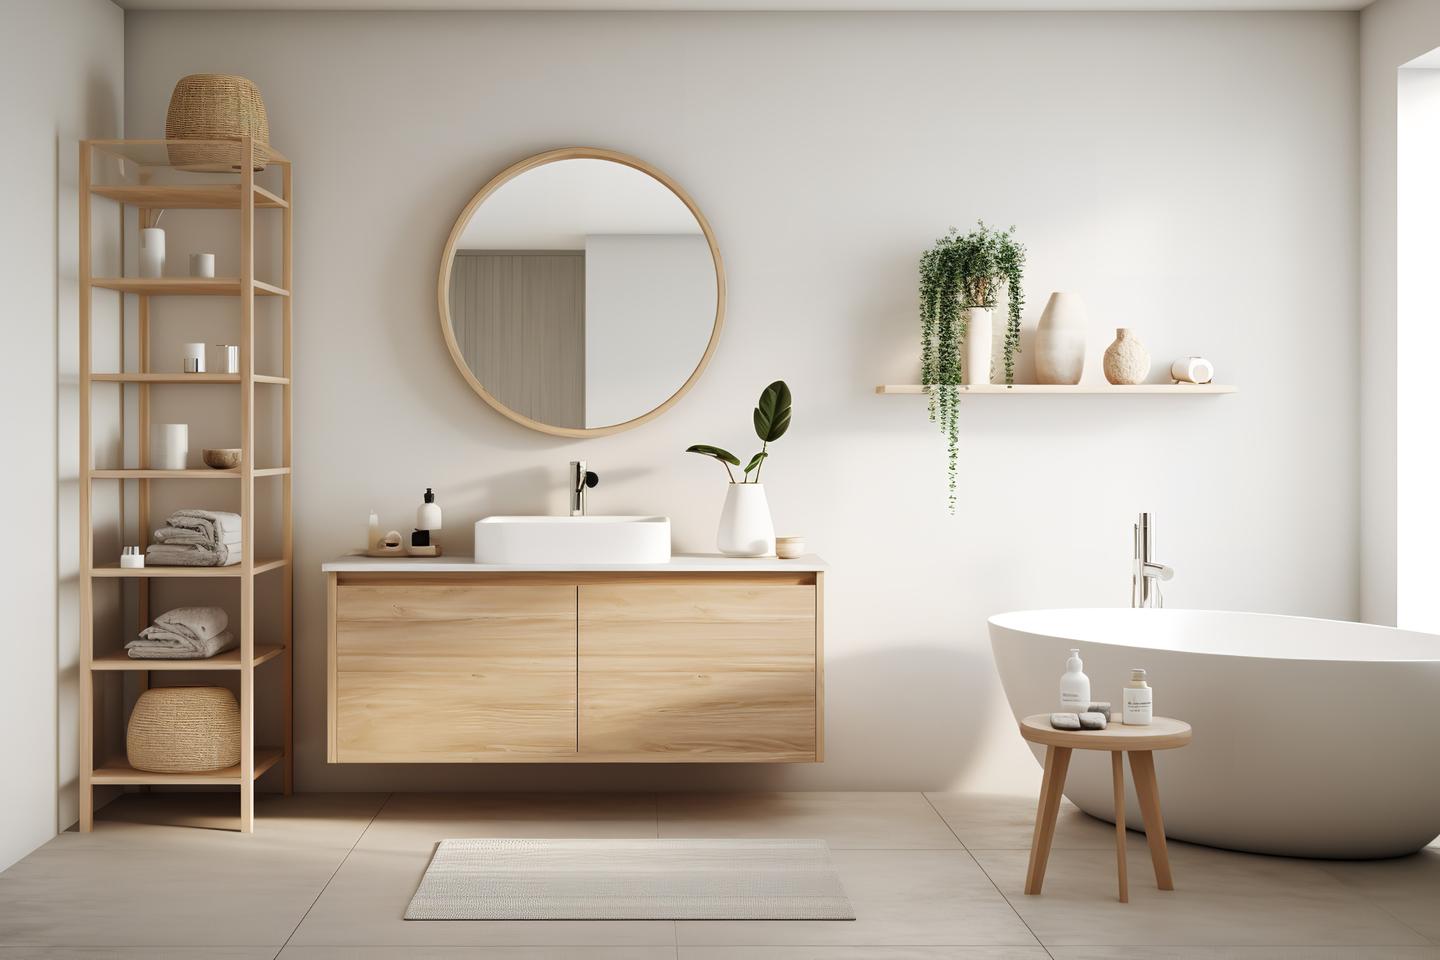 Möbliertes Badezimmer mit Holzelementen.